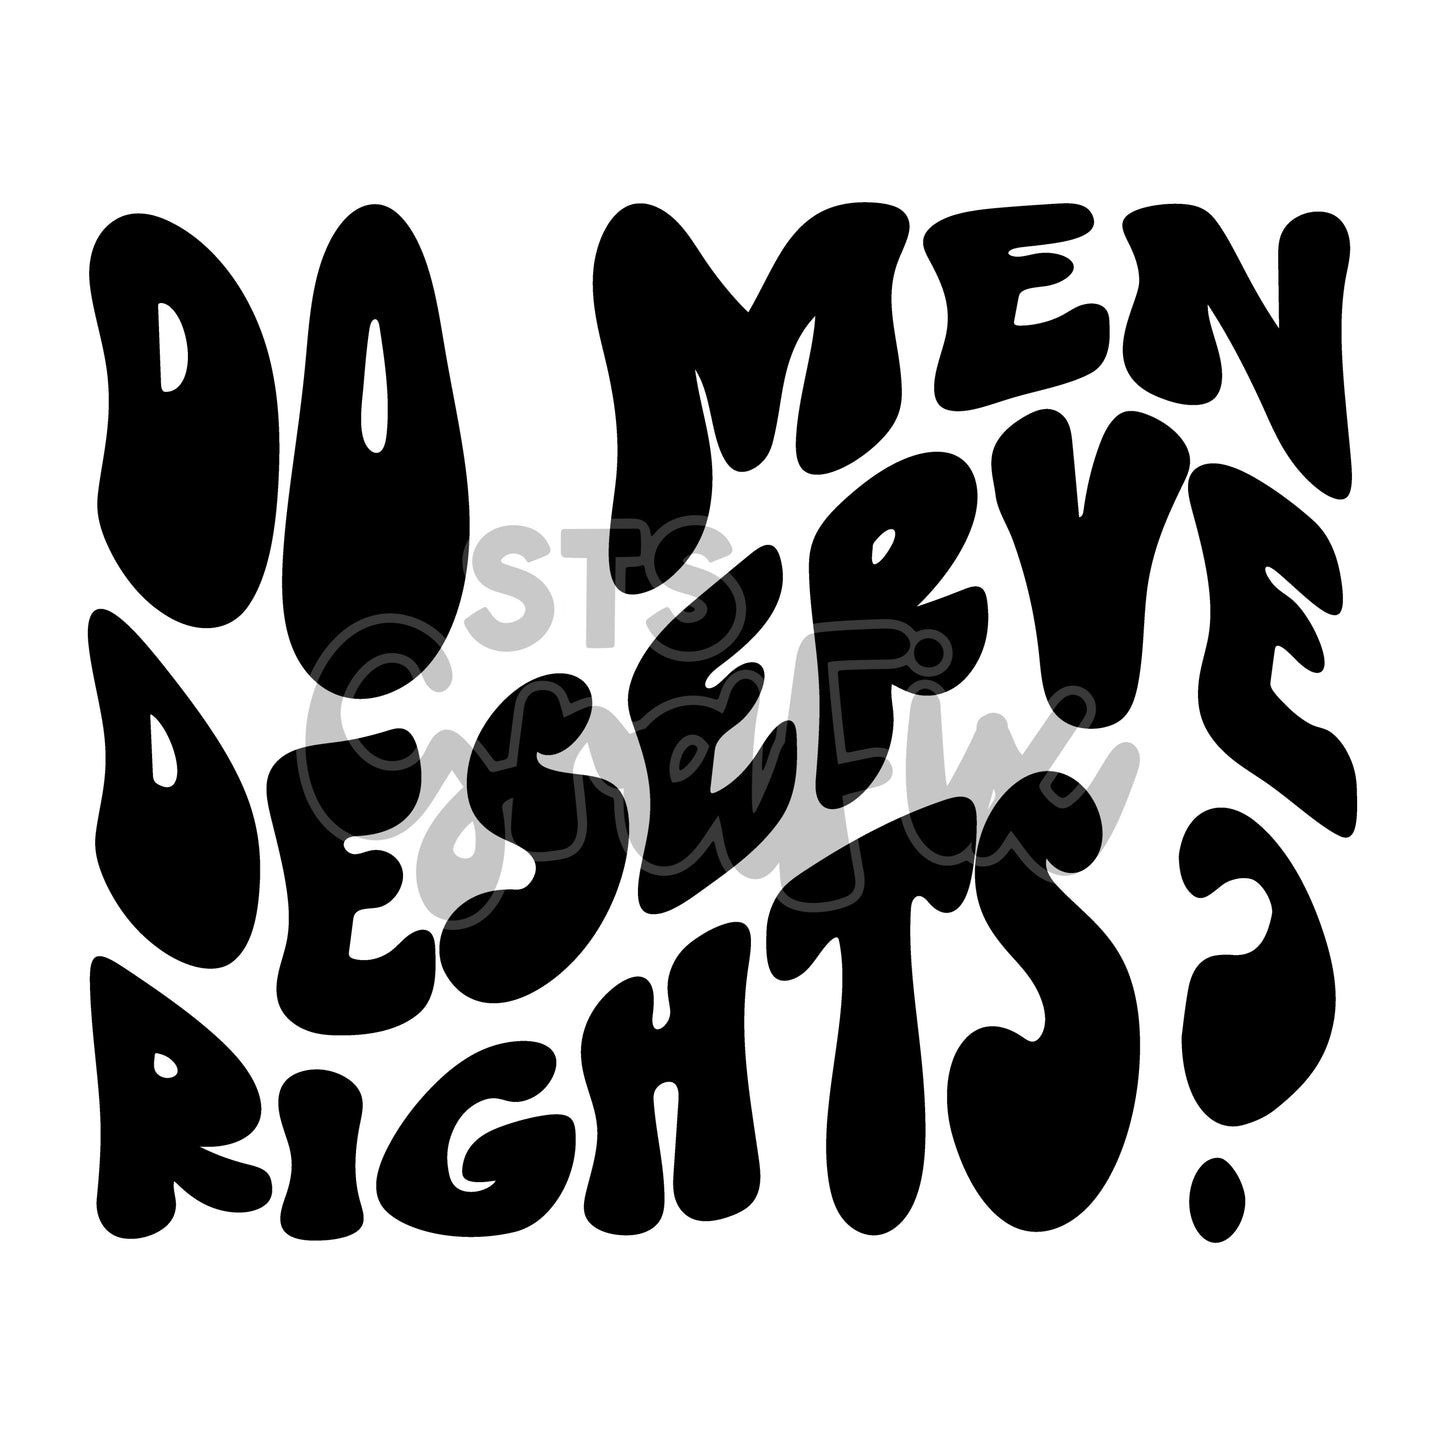 Do Men Deserve Rights—Both Colors Shown